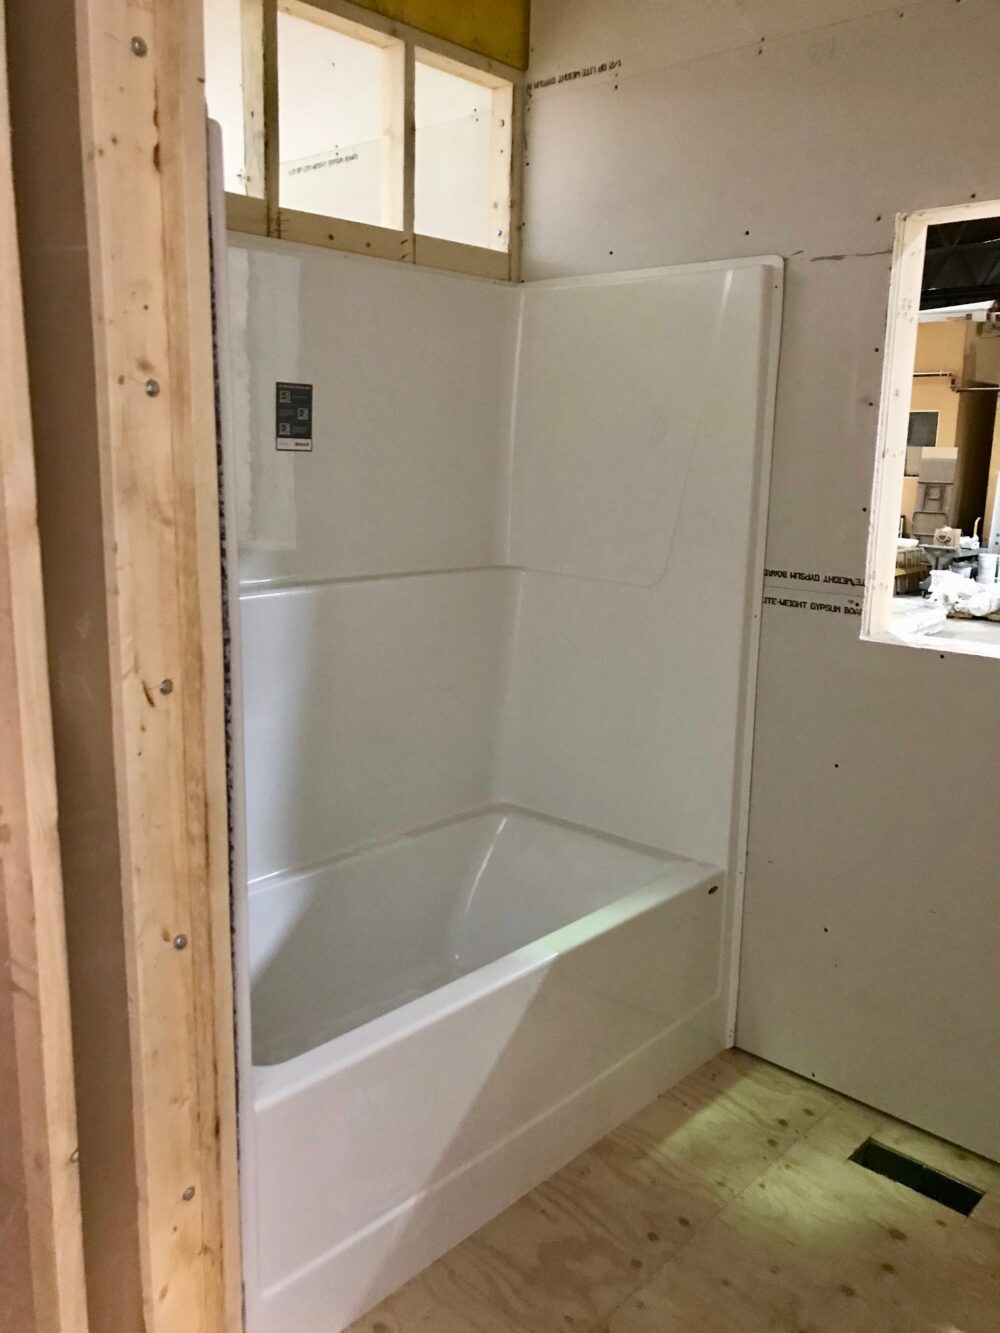 Bathroom Mid-Construction